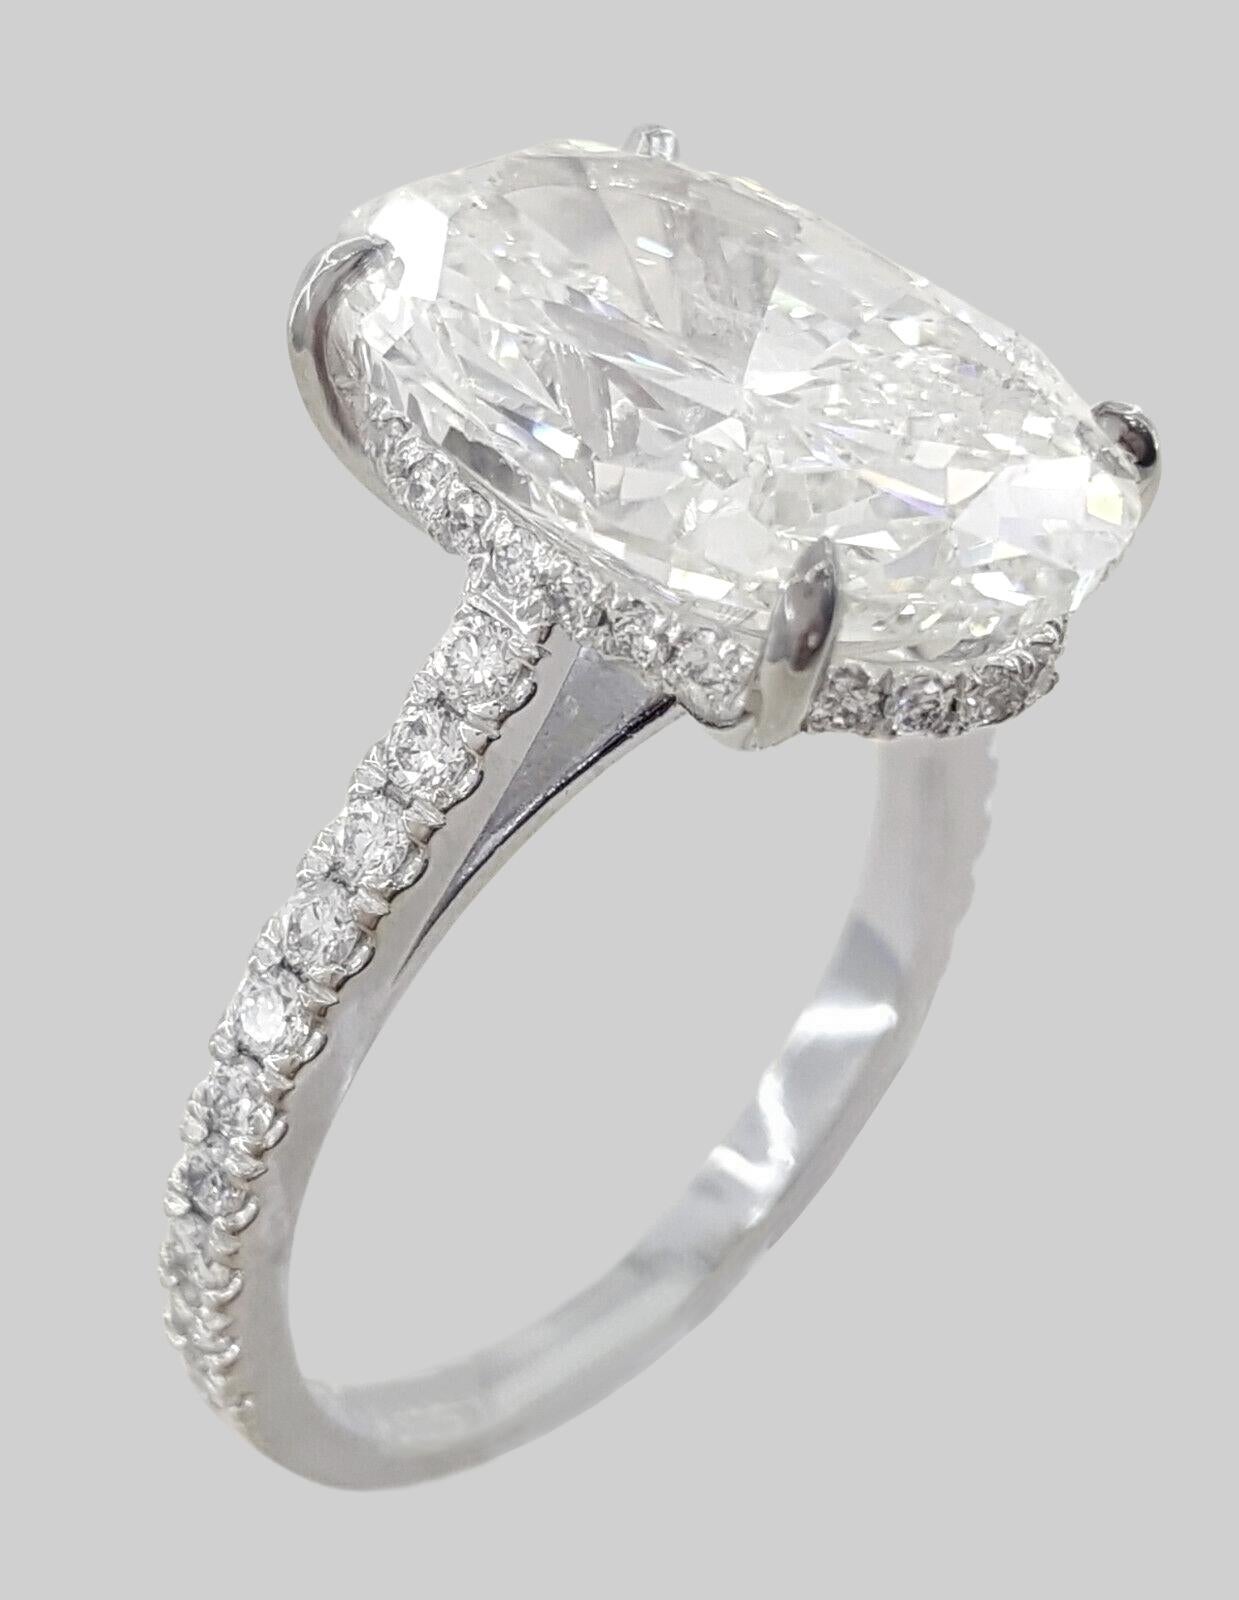 7 carat oval ring